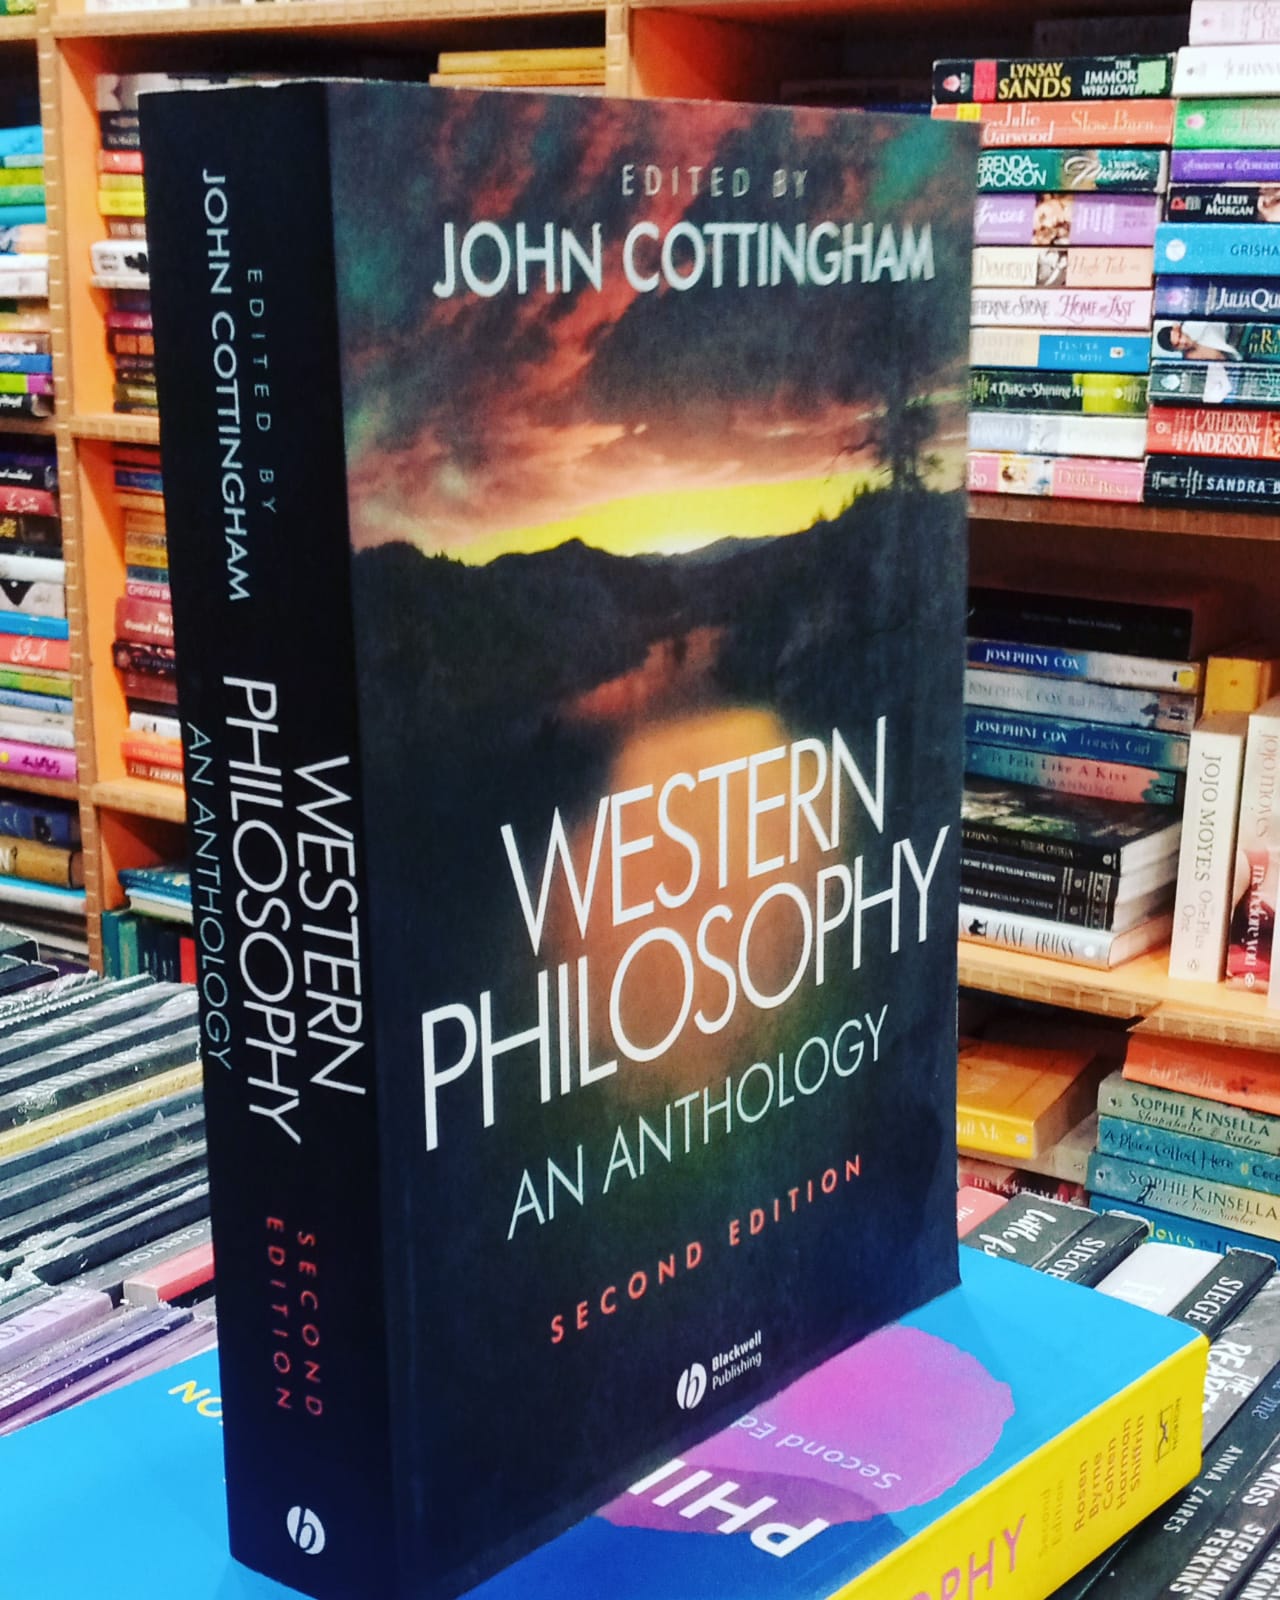 western philosophy edited by john cottingham. new original large size .